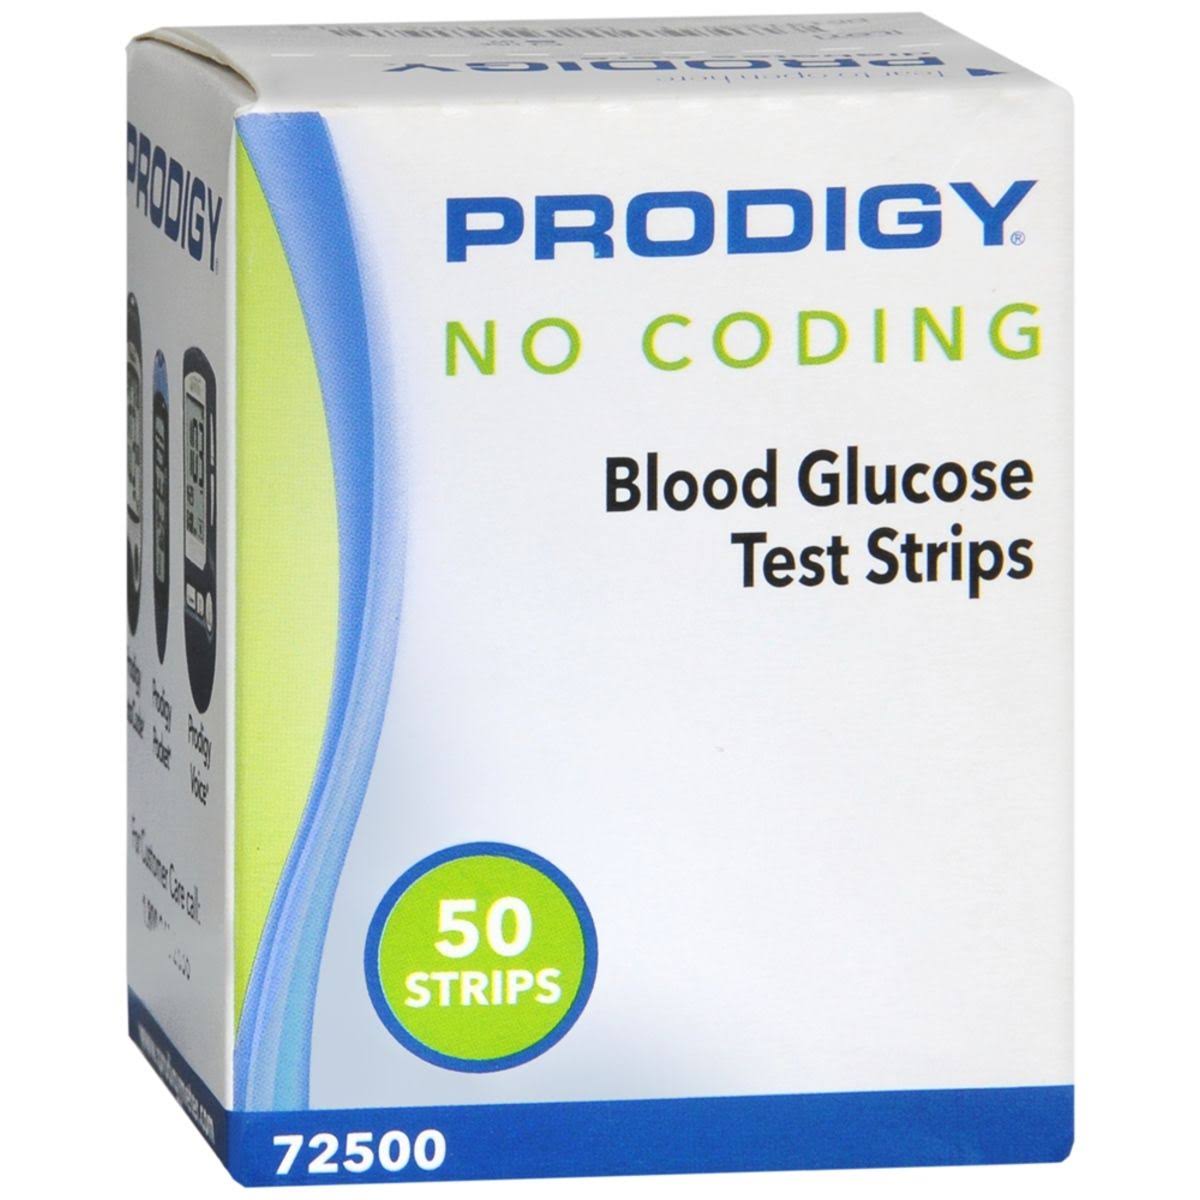 Prodigy No Coding Blood Glucose Test Strips - 50ct